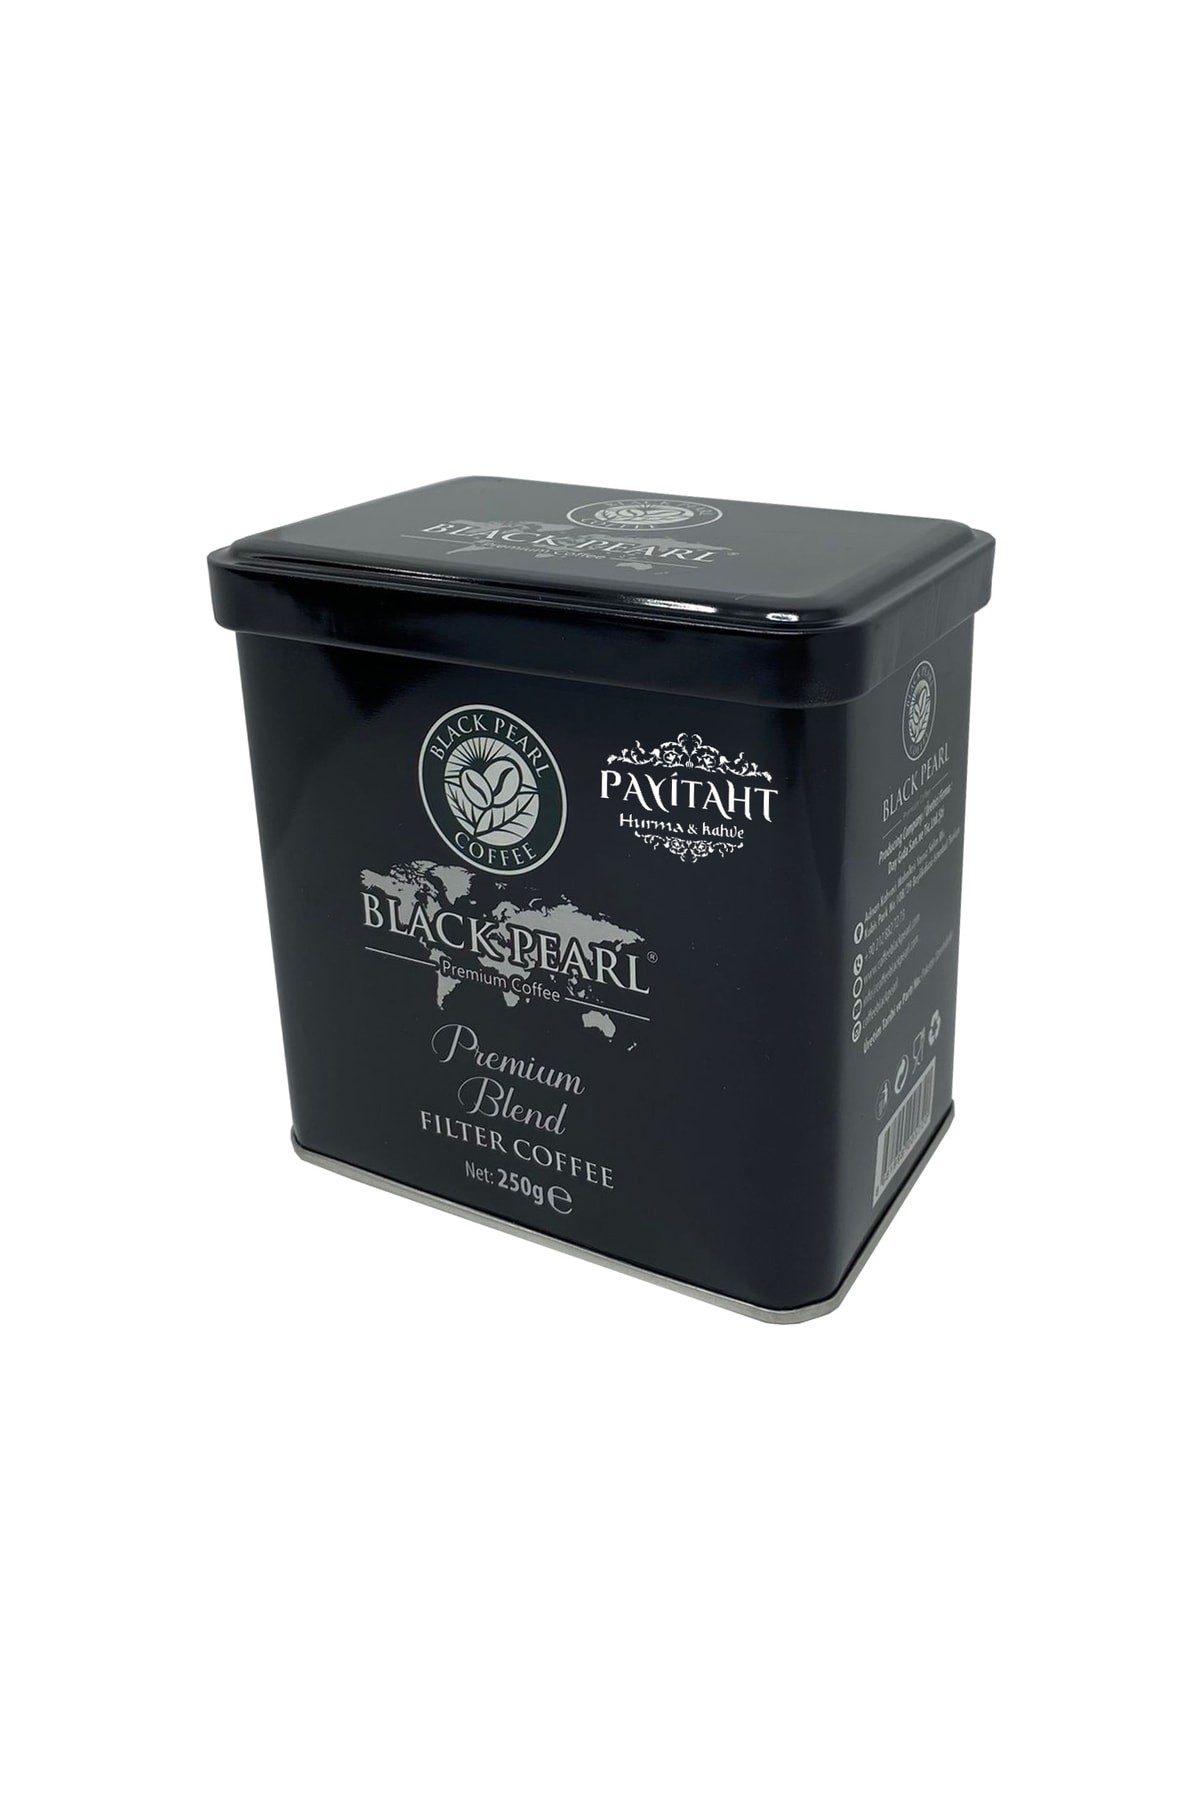 BLACK PEARL- PREMIUM BLEND FILTER COFFEE 250 GR